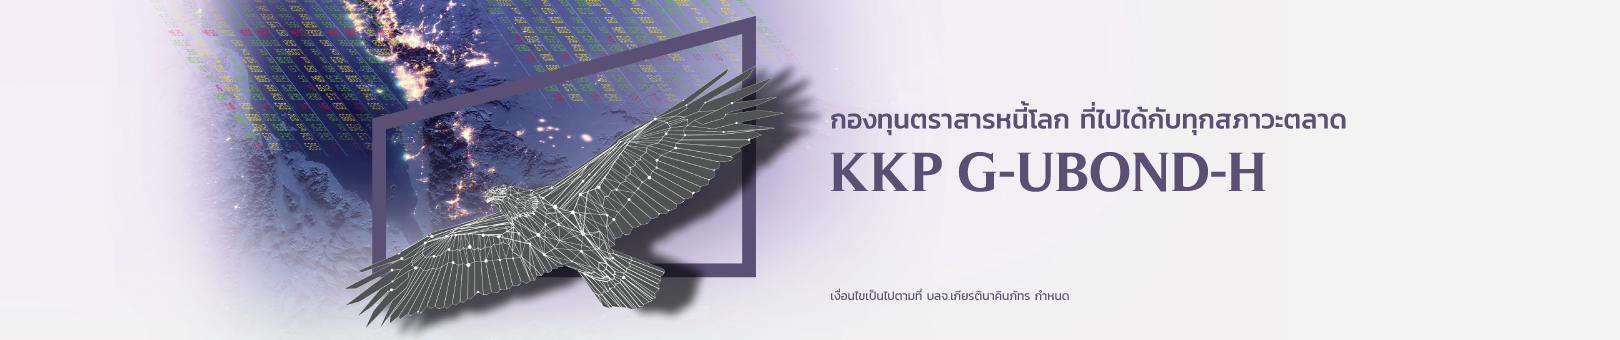 KKP-Global-u-Bond-Fund_1620x340 (1)